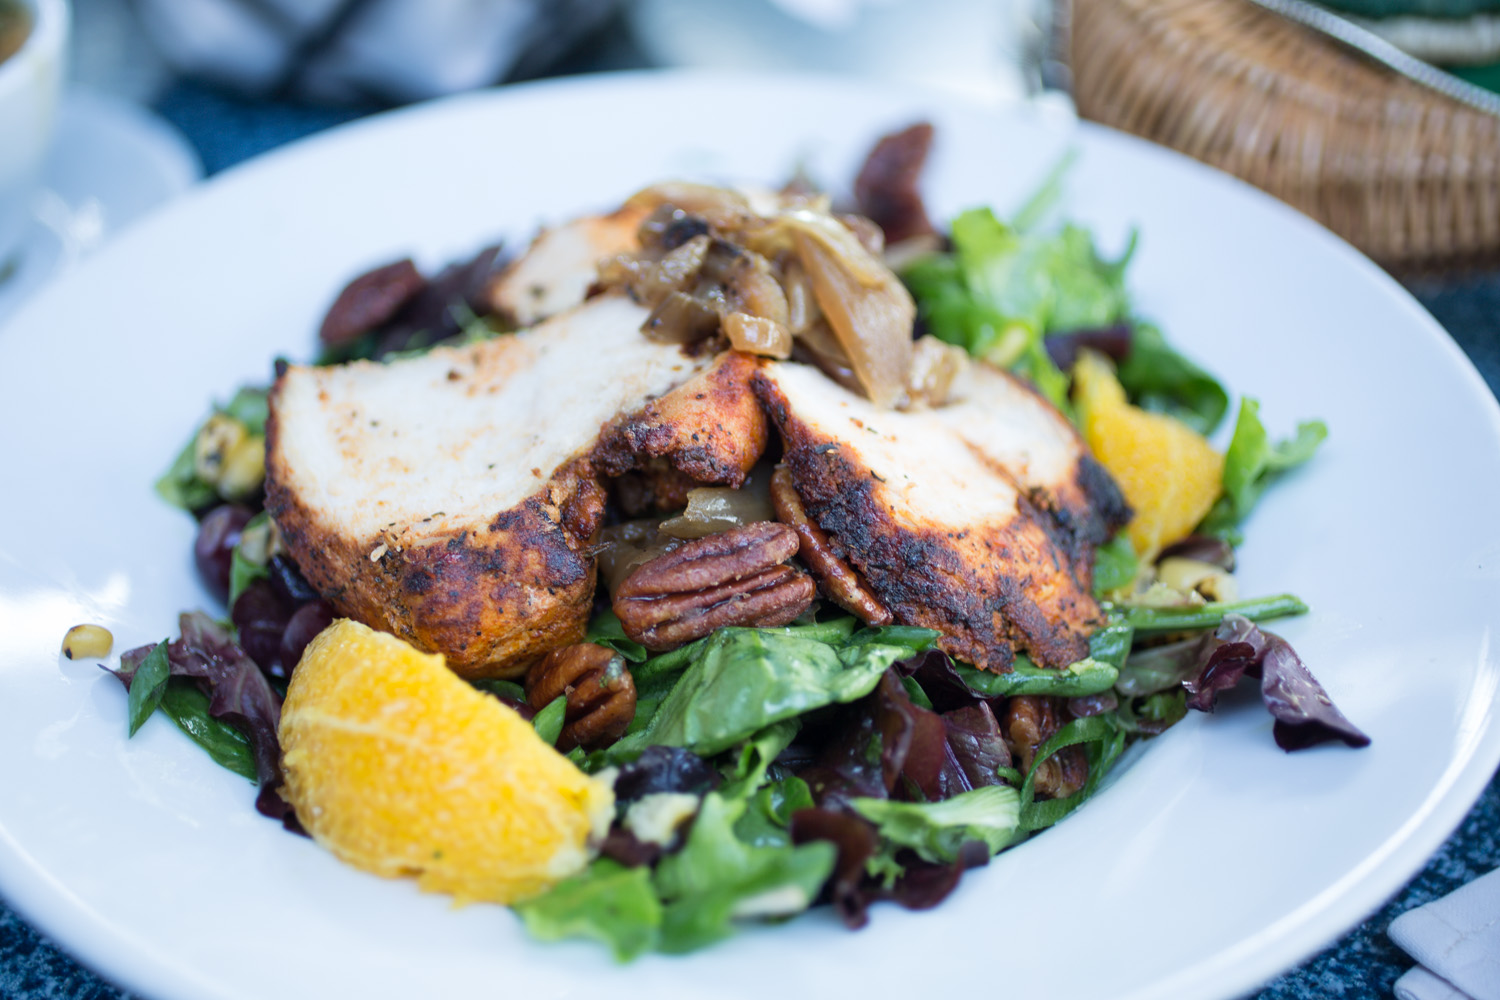 Disneyland Food Blog- Cafe Orleans Crescent City Salad with Blackened Chicken